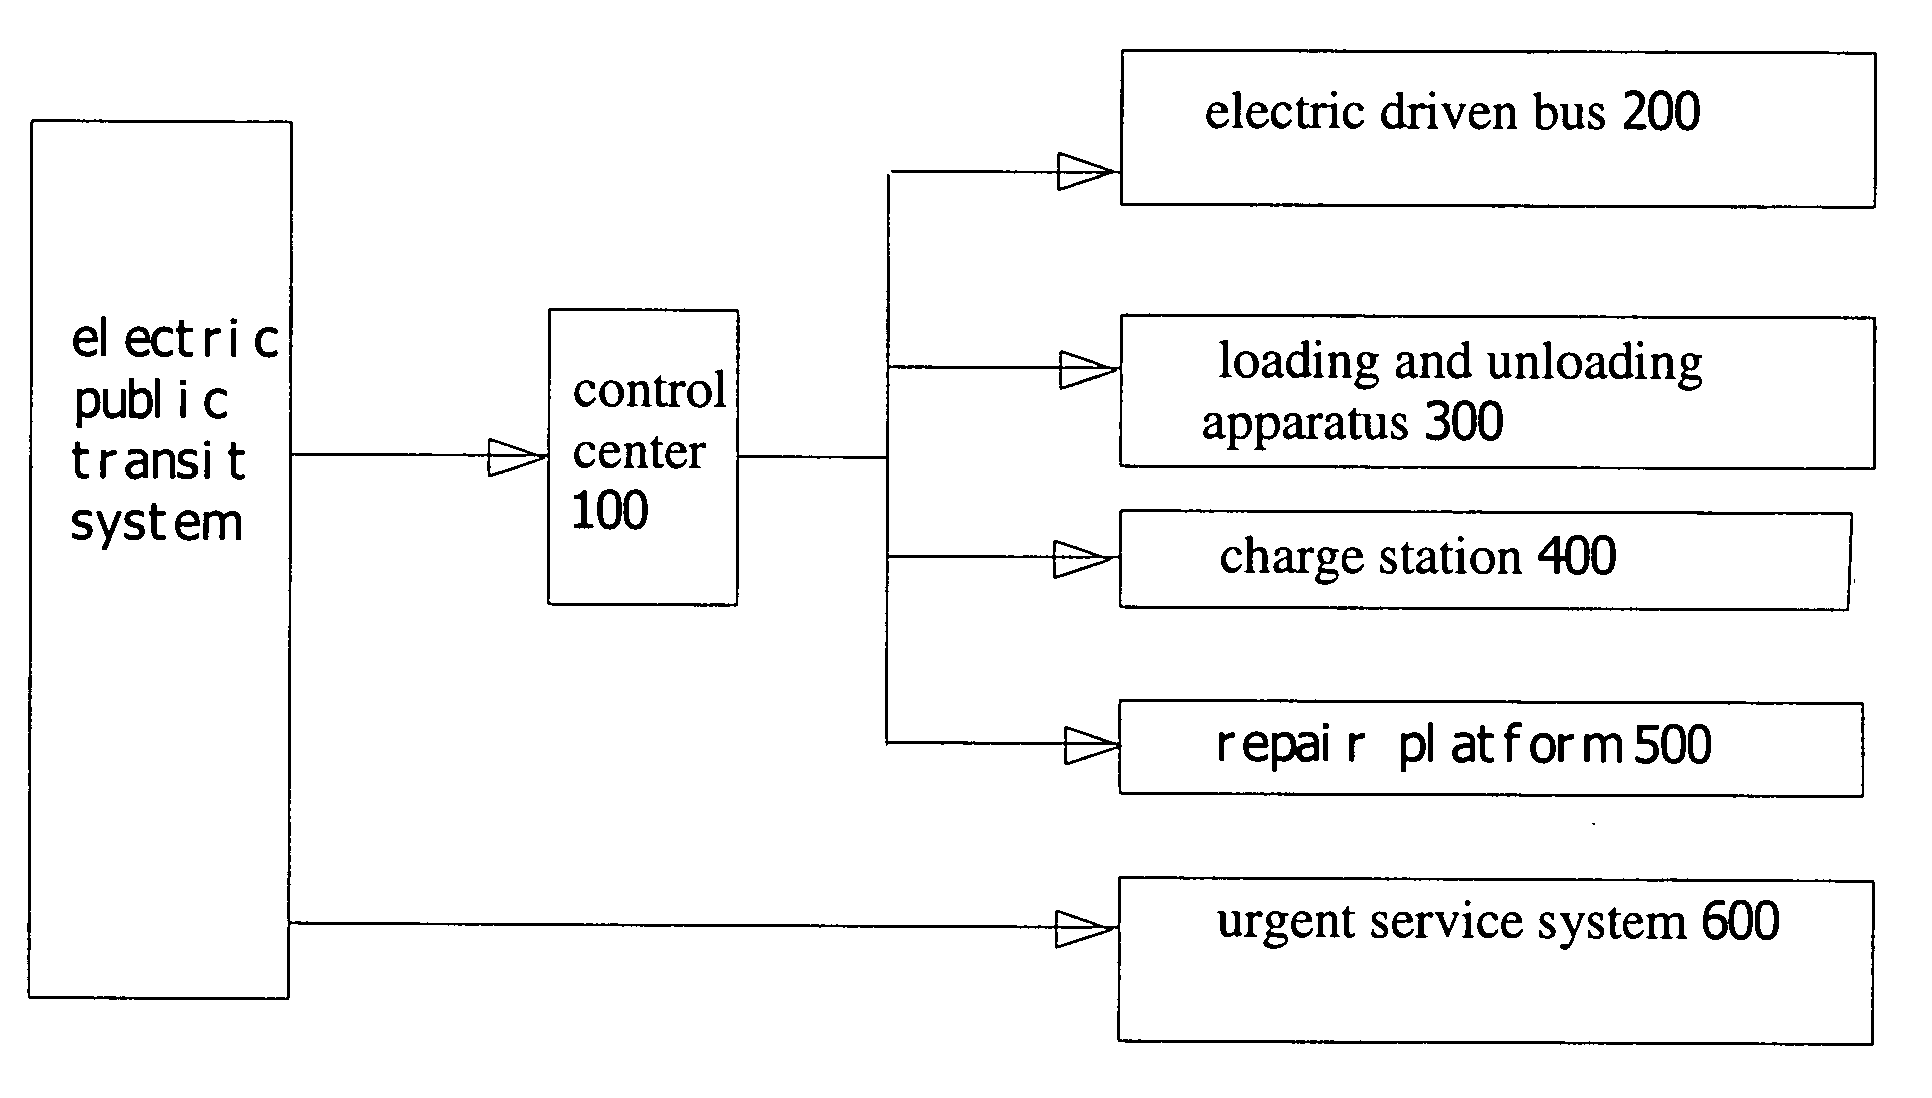 Electric Public Transit System